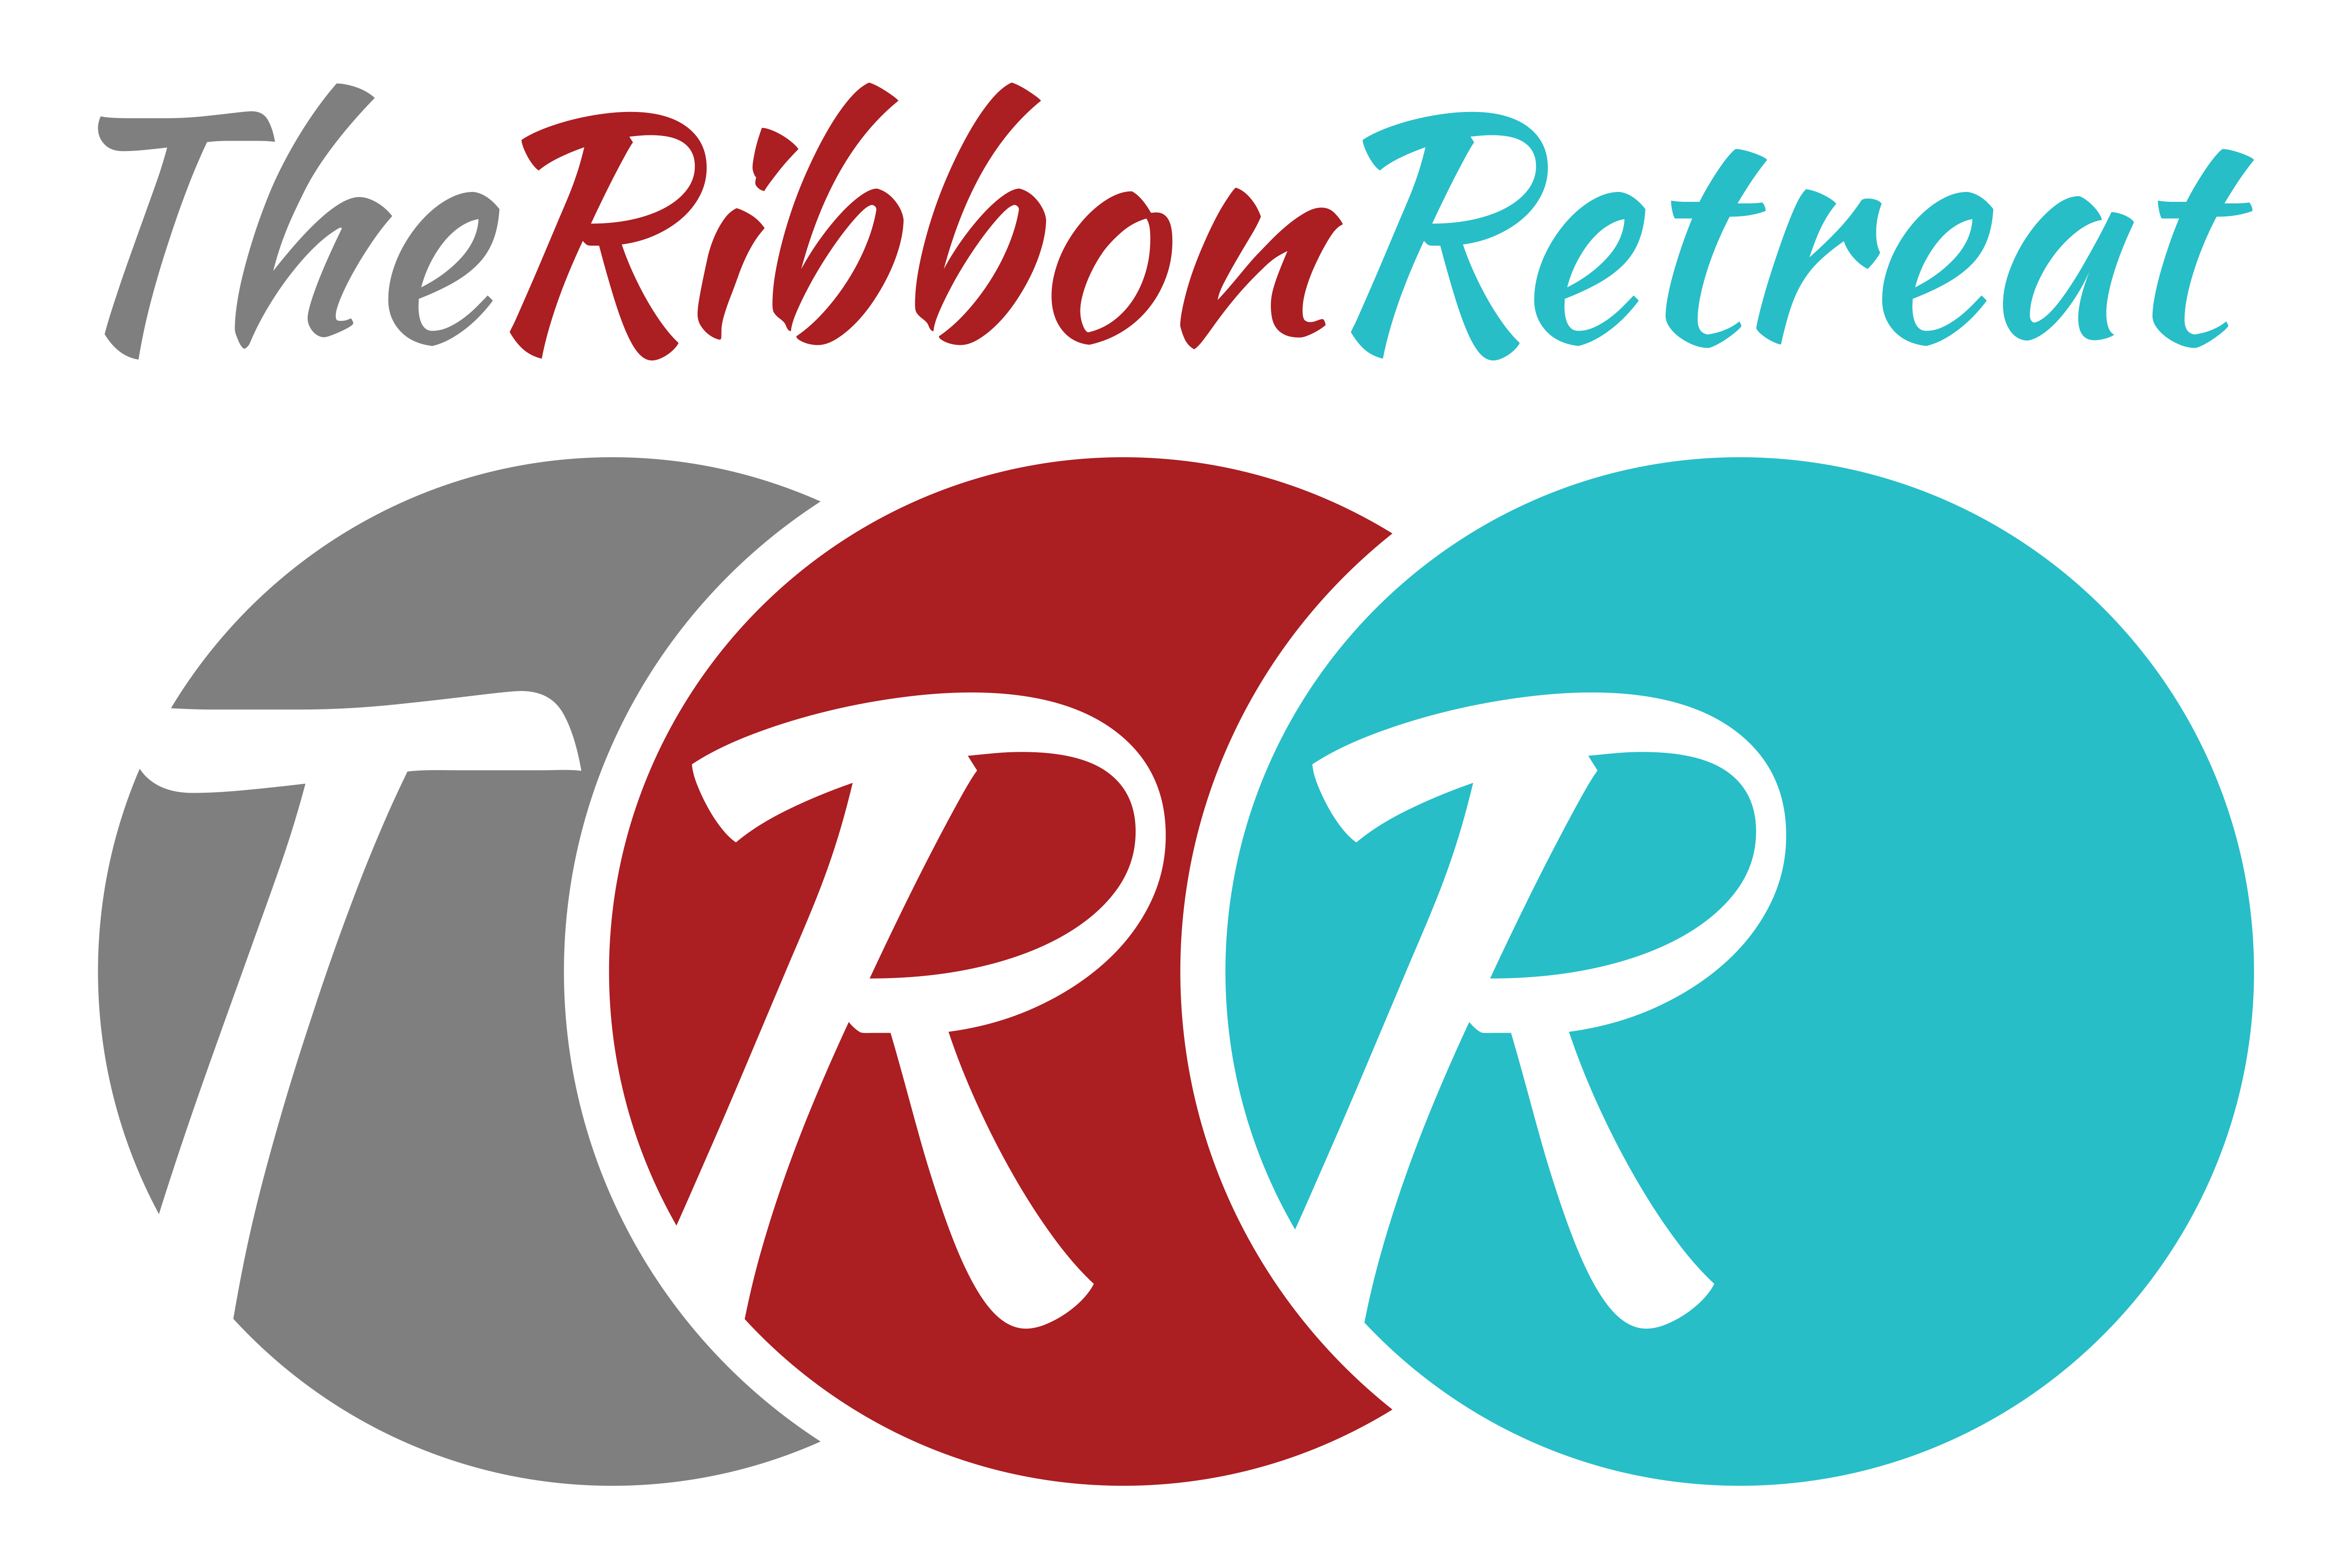 The Ribbon Retreat Logo